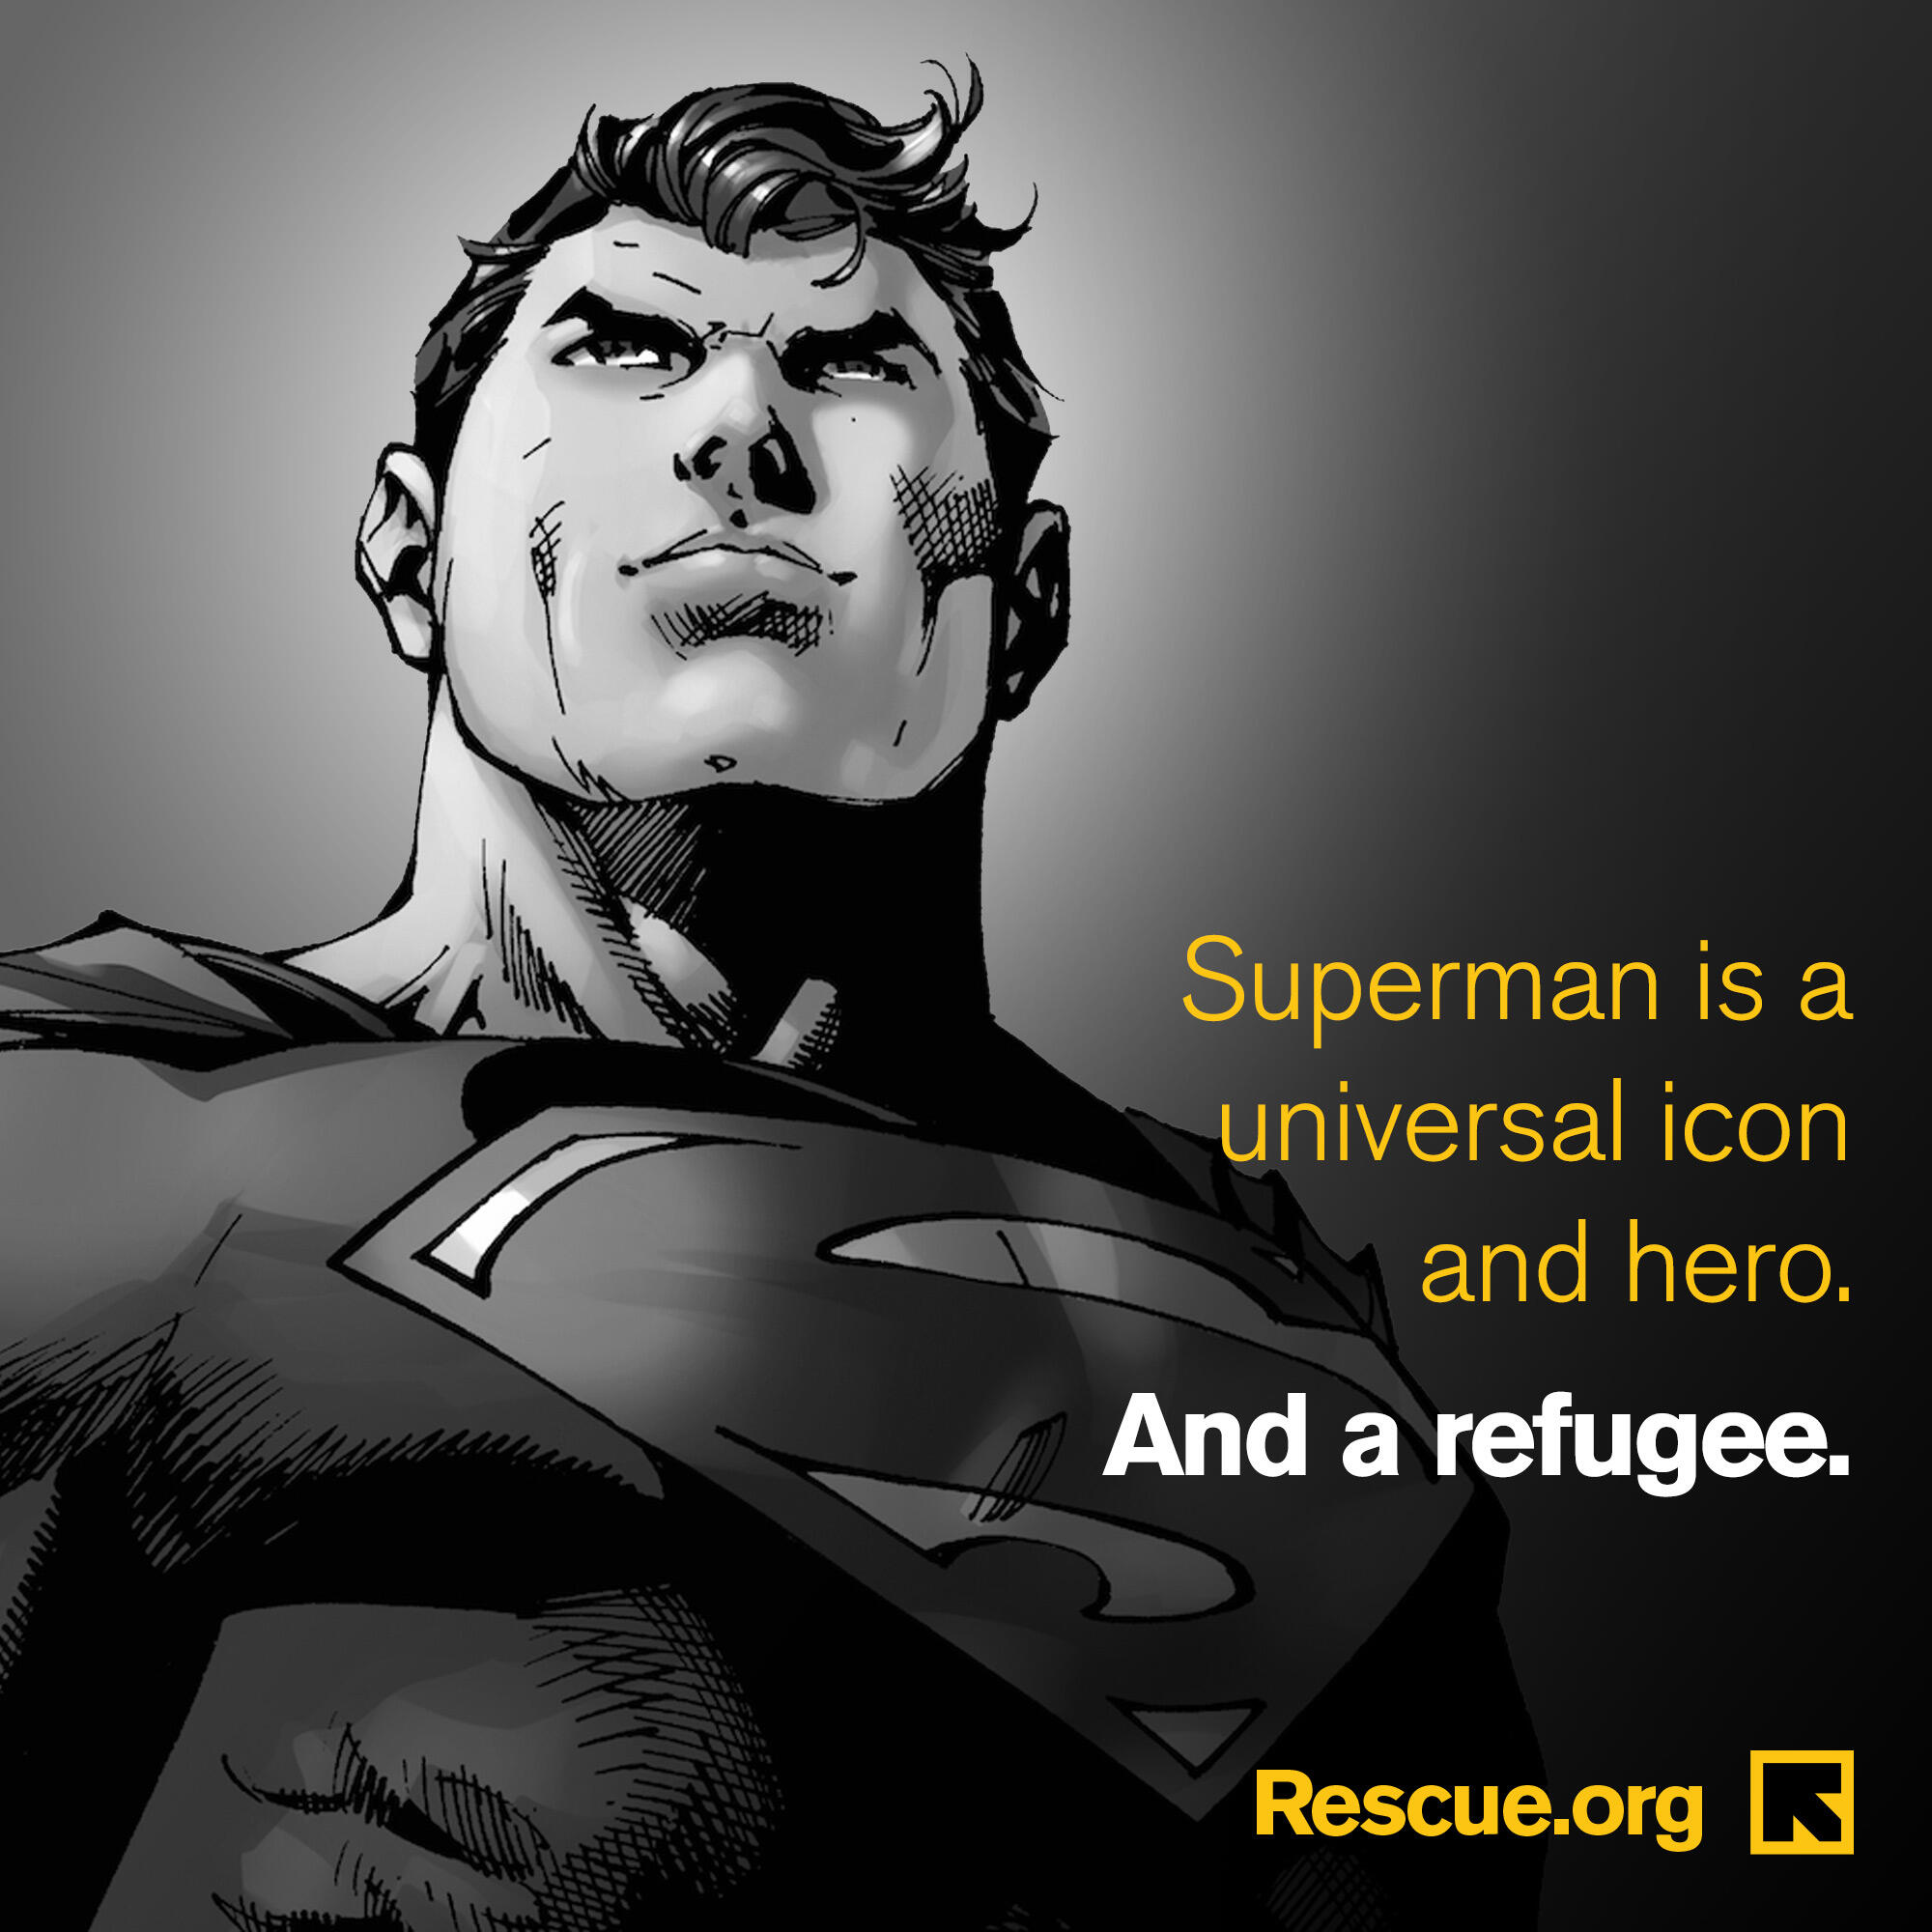 Superman was a refugee